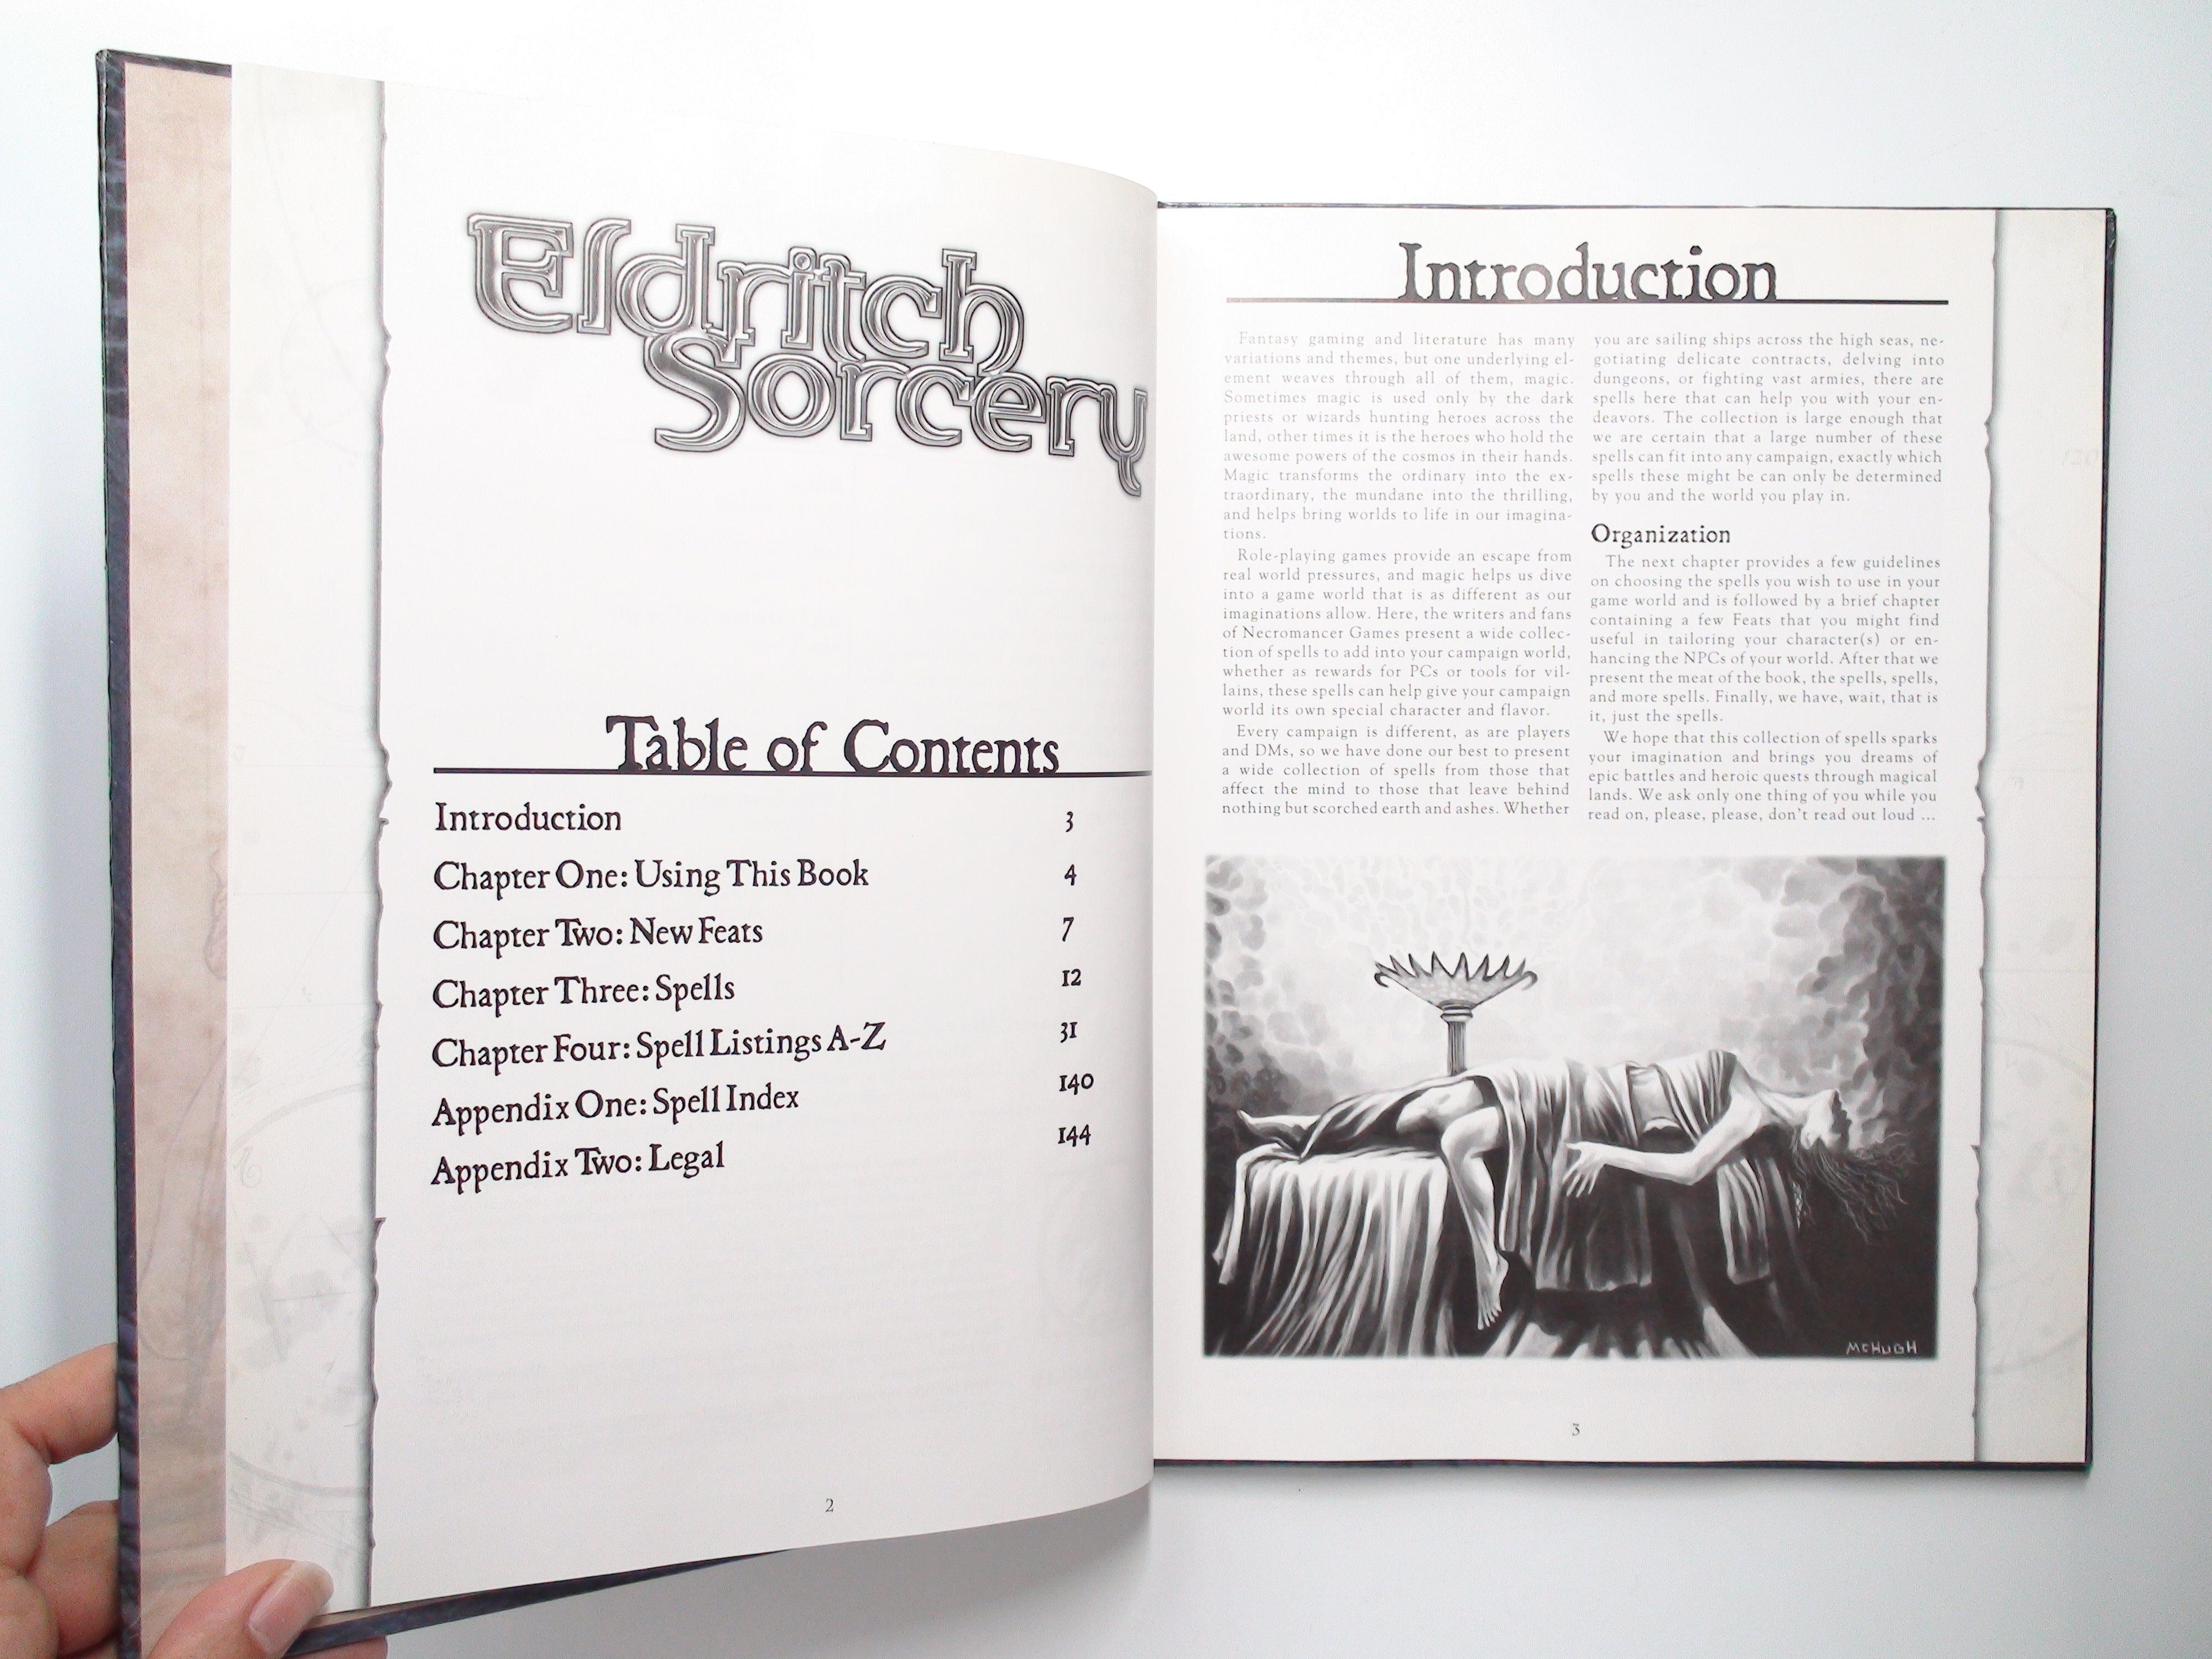 Eldritch Sorcery, Sword and Sorcery Games, D20 RPG, WW8396, 2005